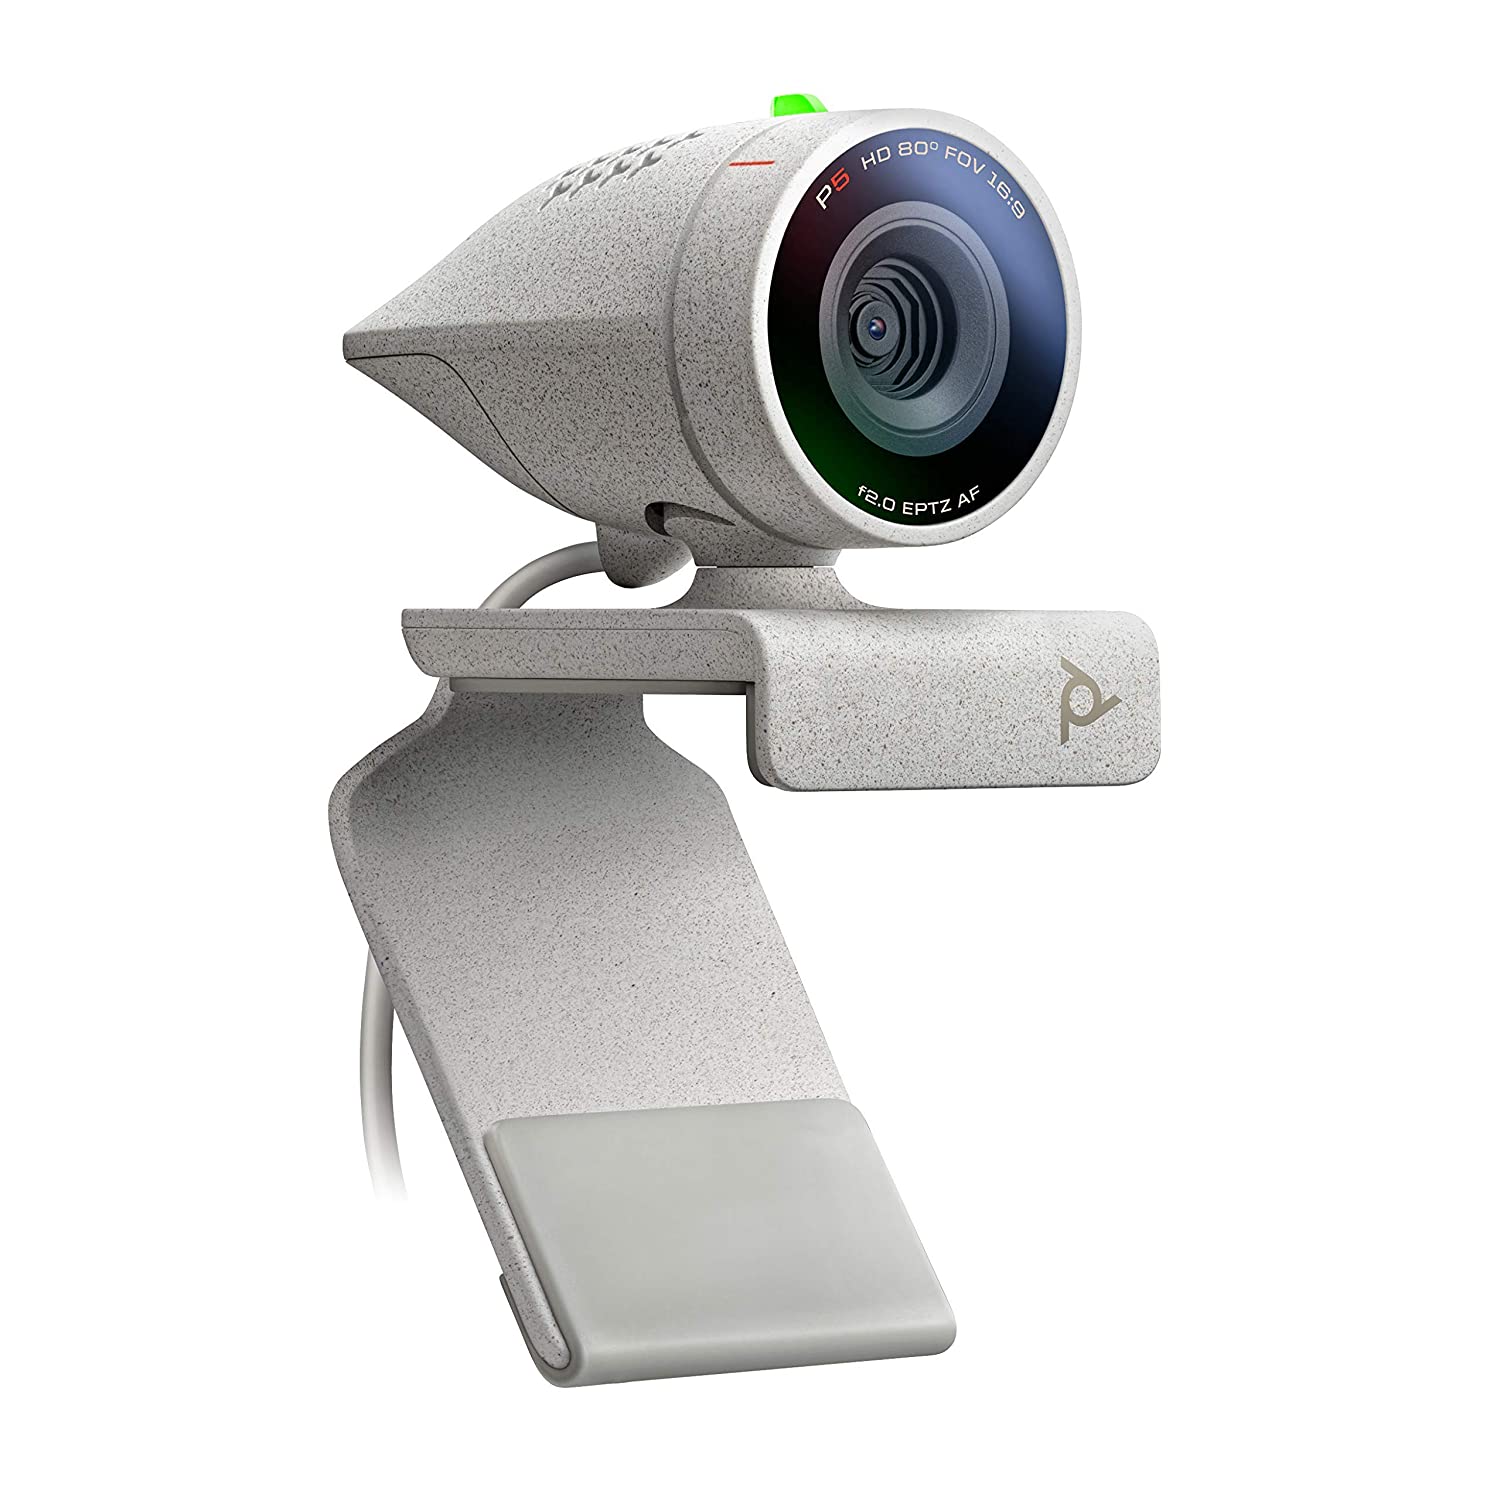 poly-studio-p5-professional-webcam